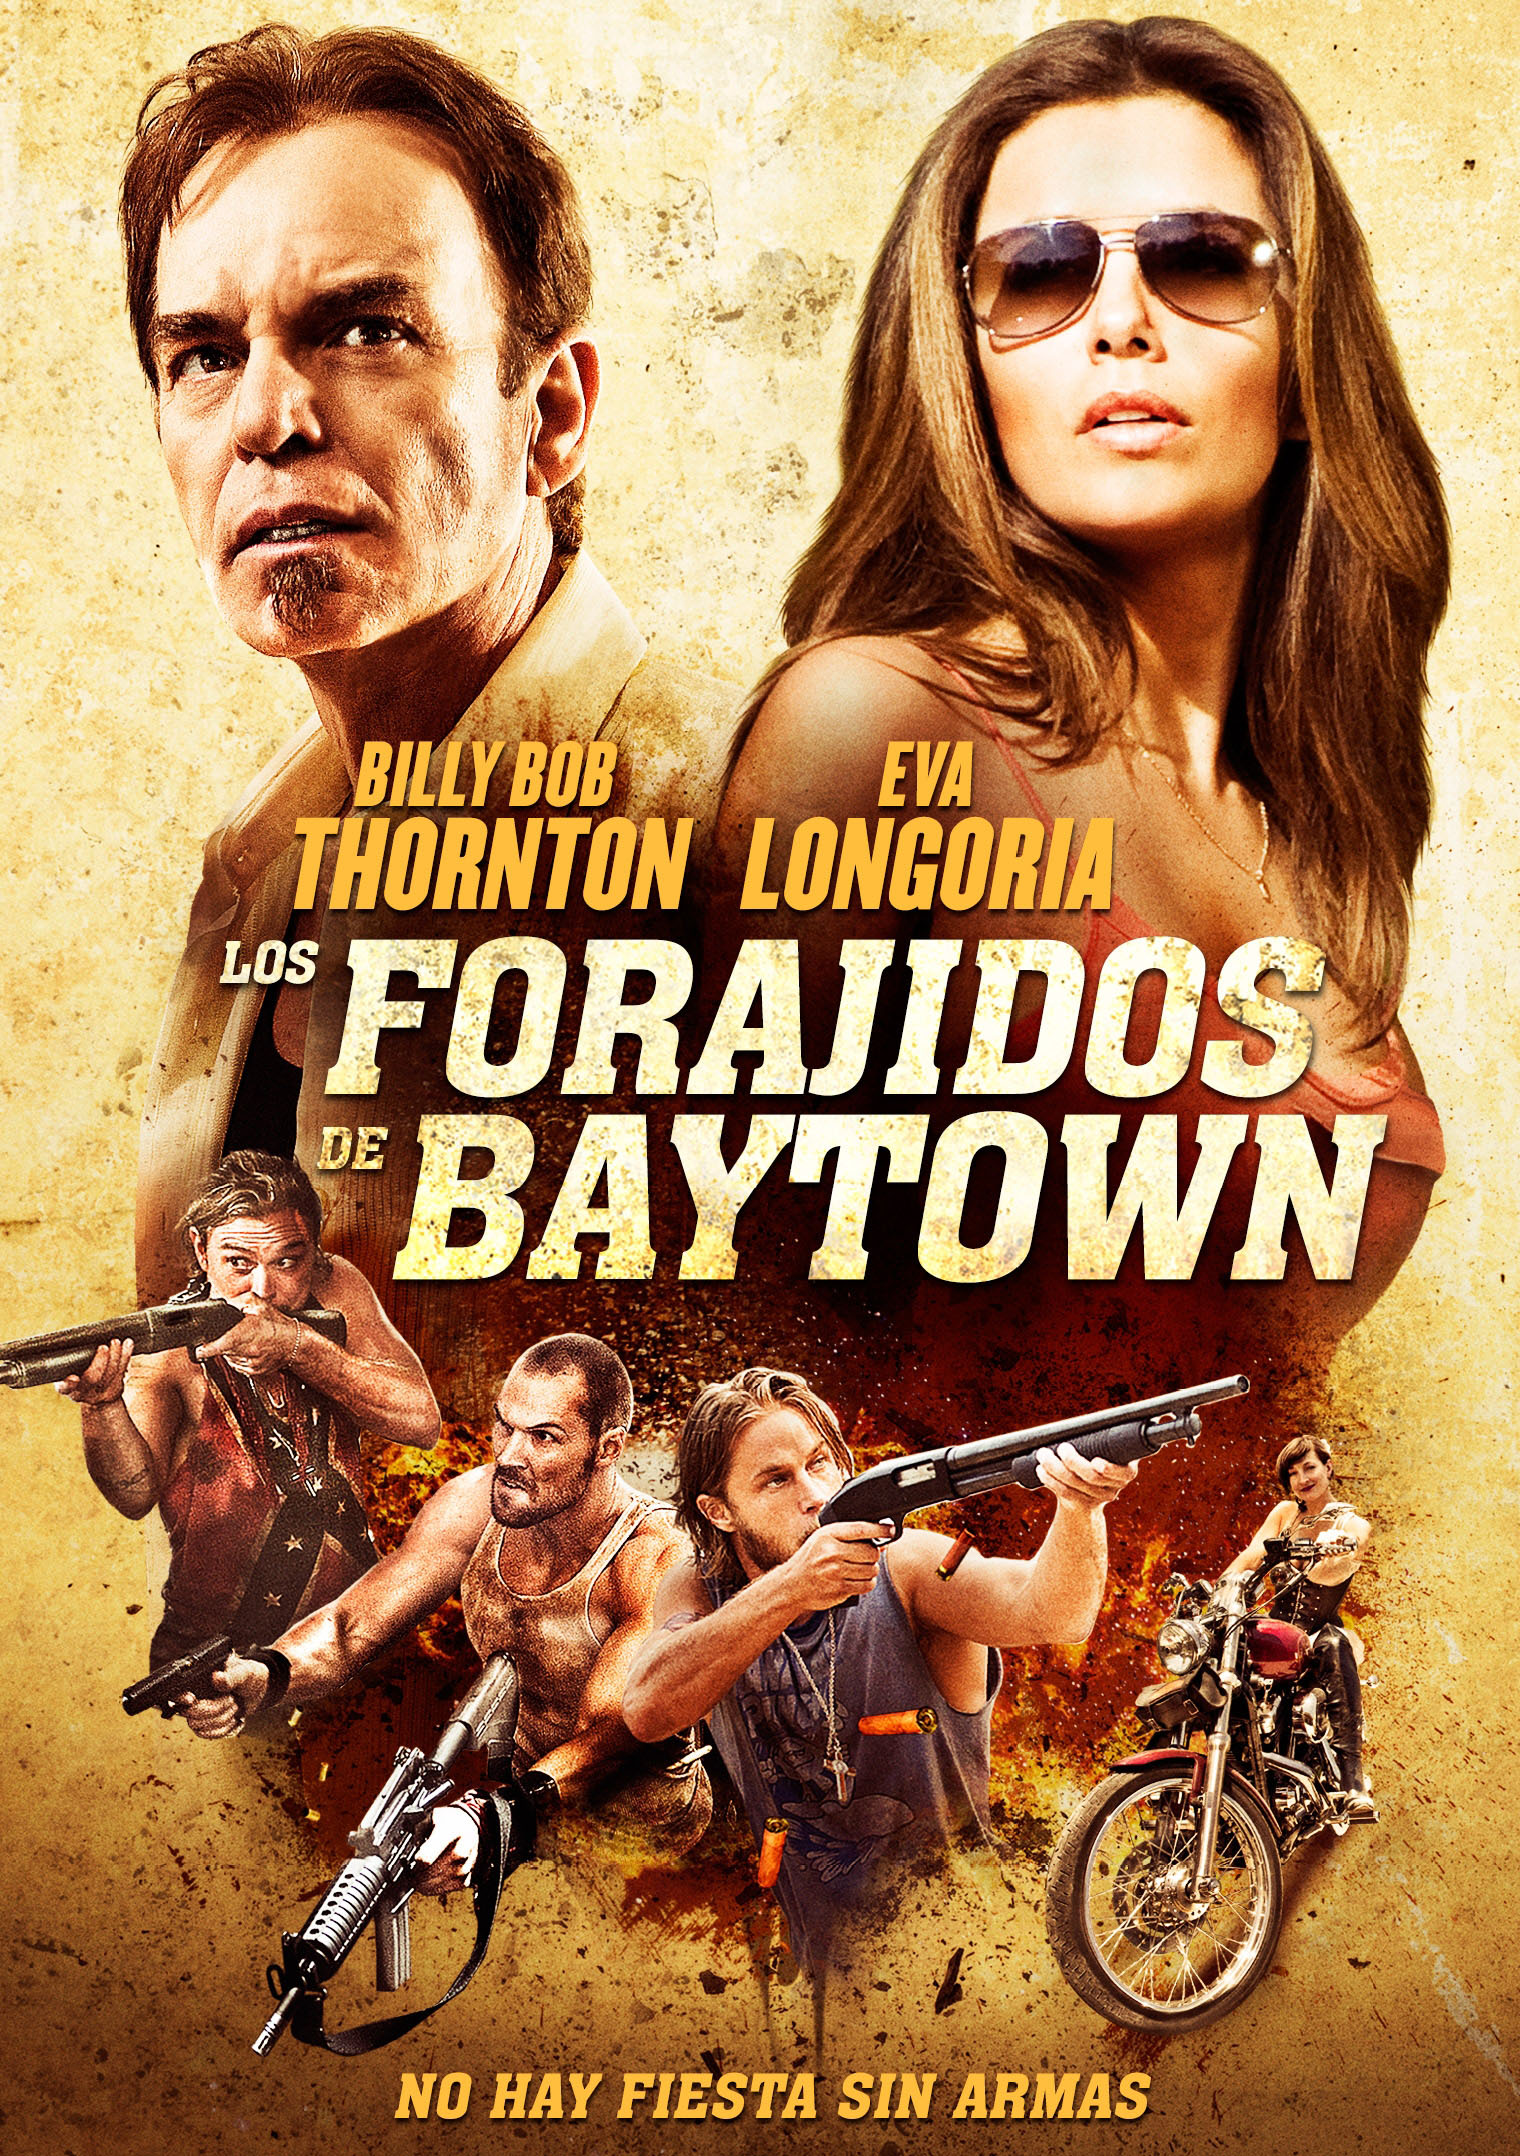 Customer Los Forajidos de Baytown [DVD] [2012] - Best